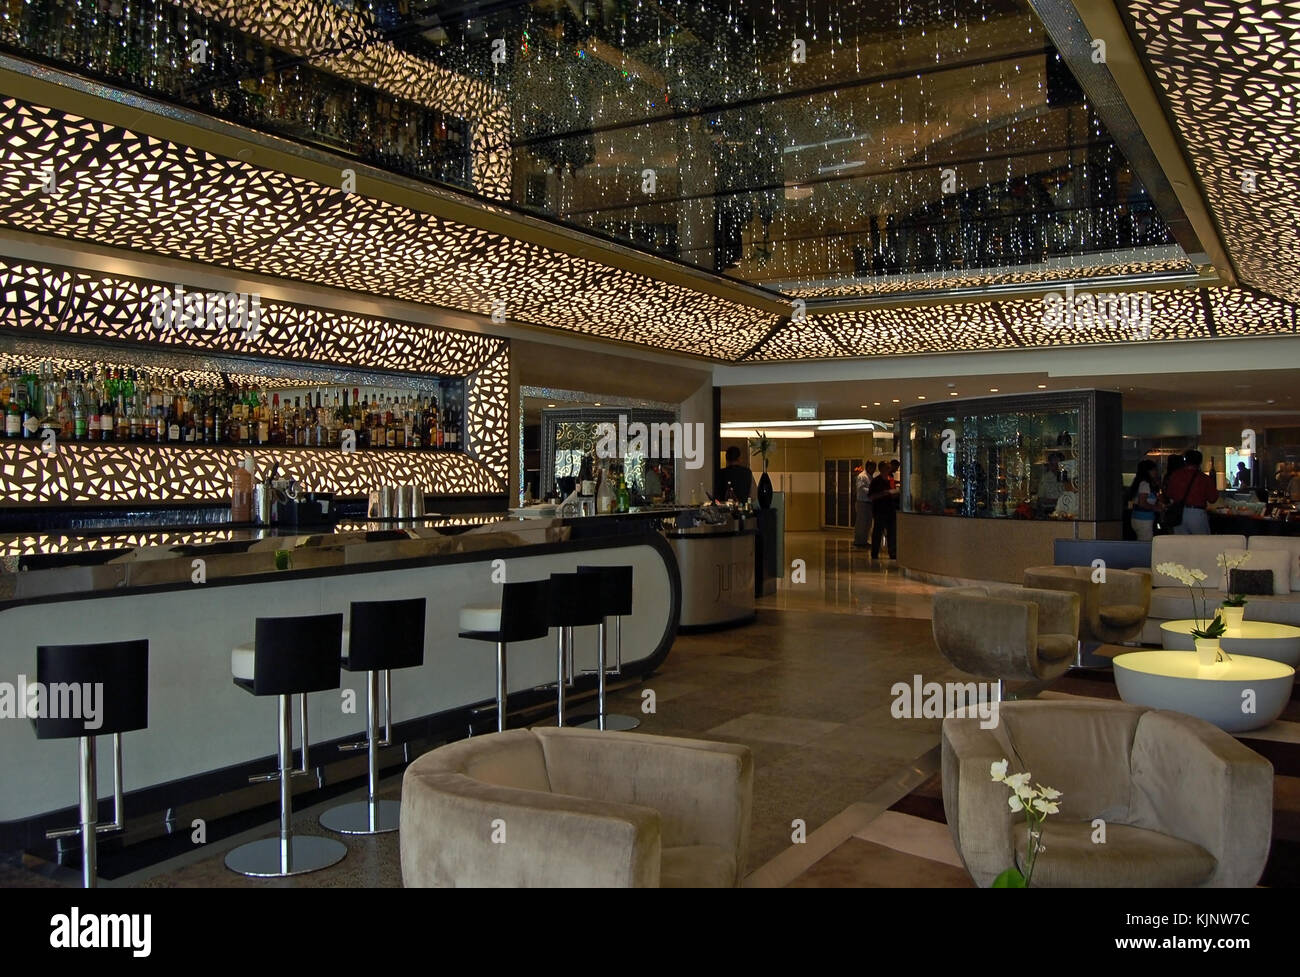 Junsui Cocktail Bar and Restaurant, Burj al Arab Hotel, Dubai, UAE Stock Photo